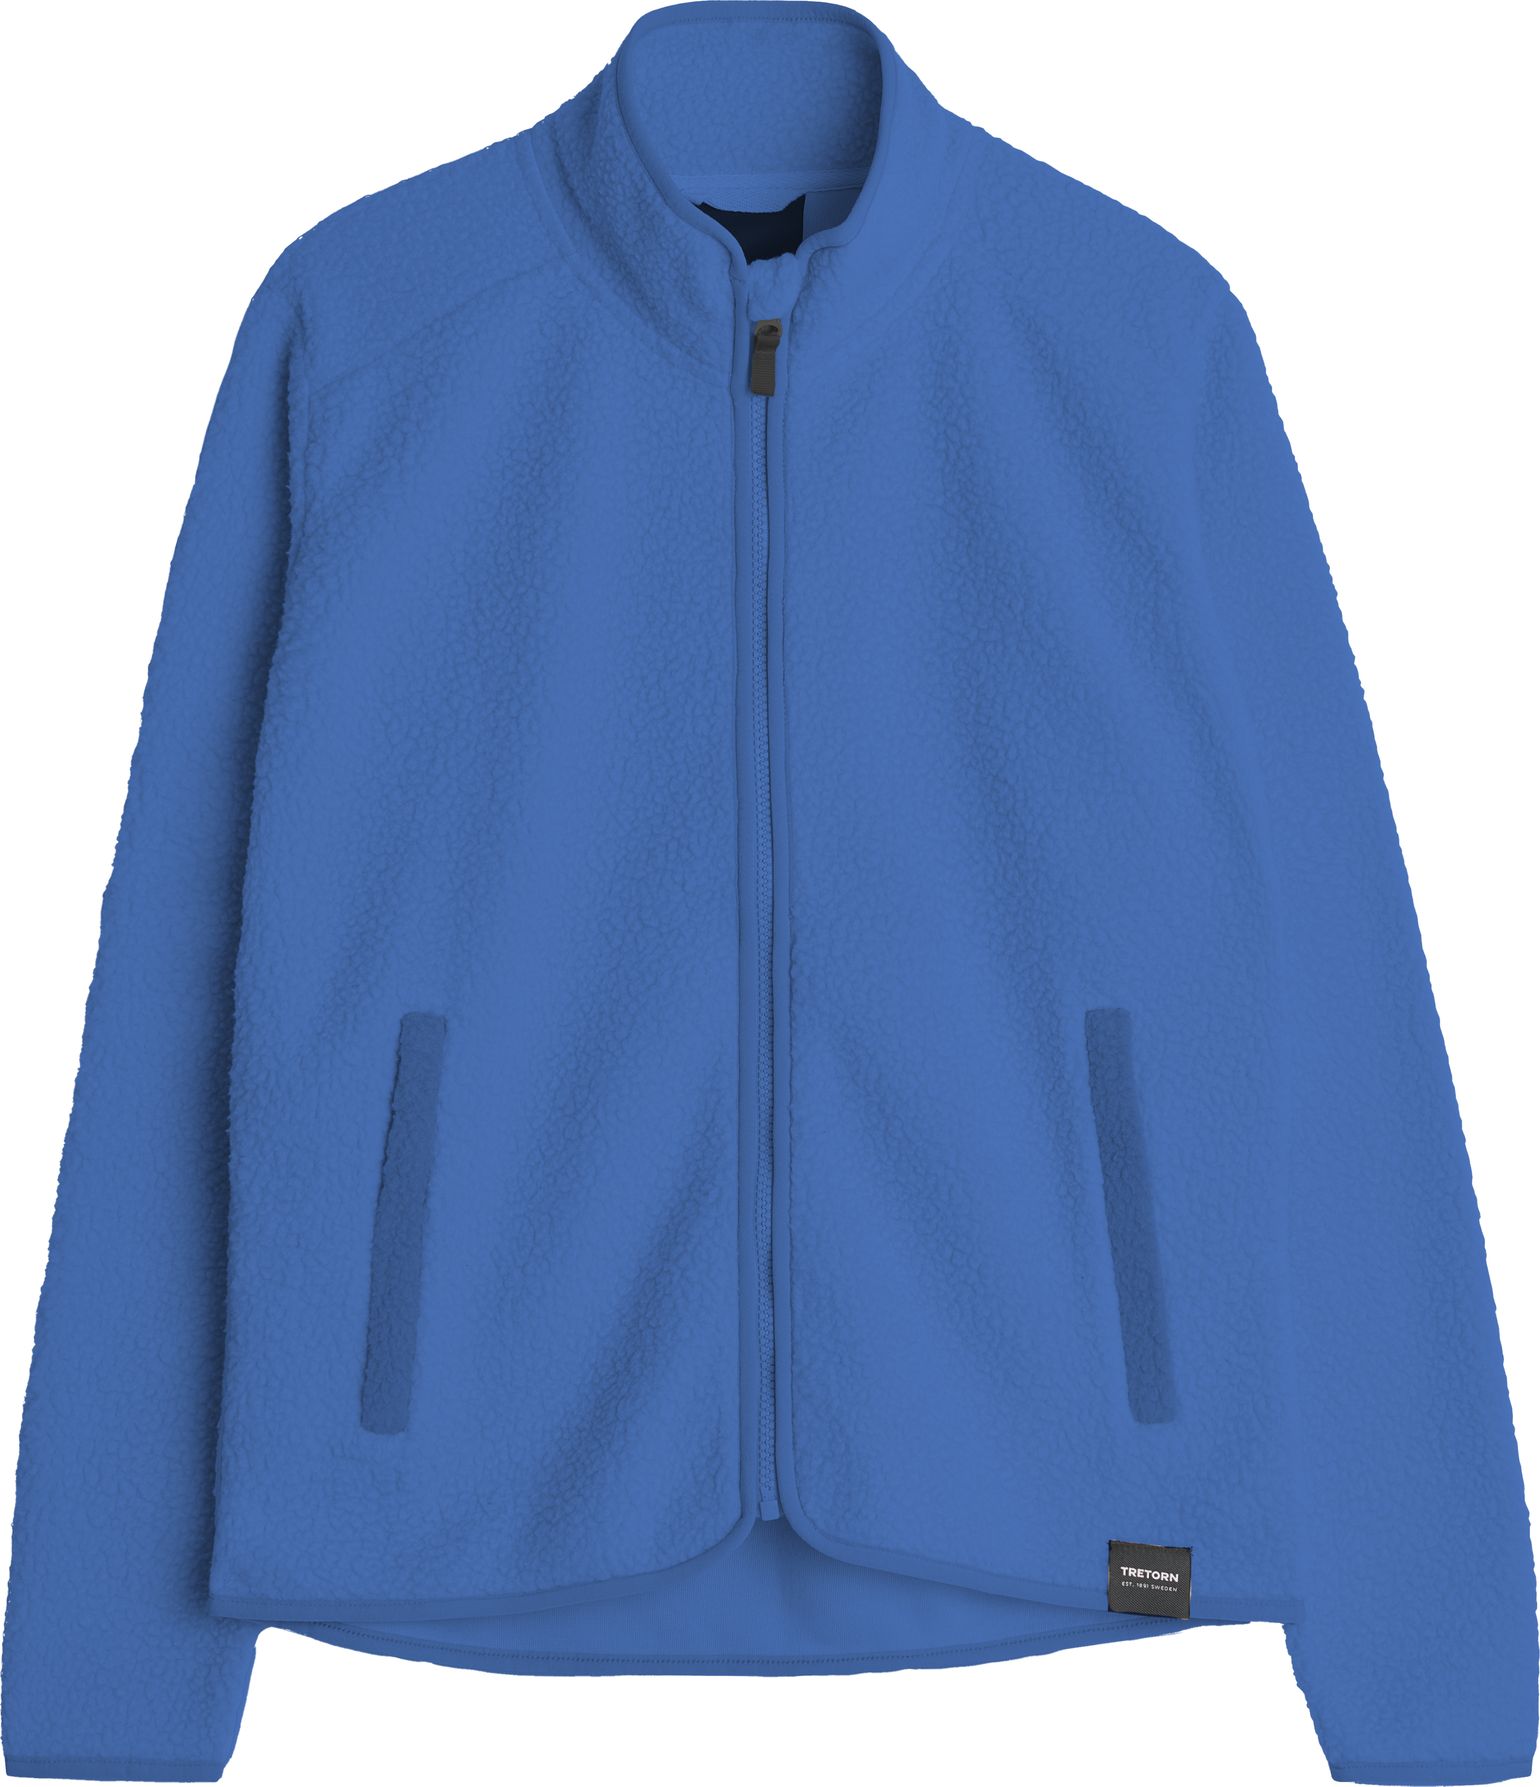 Men's Farhult Pile Jacket Palace Blue